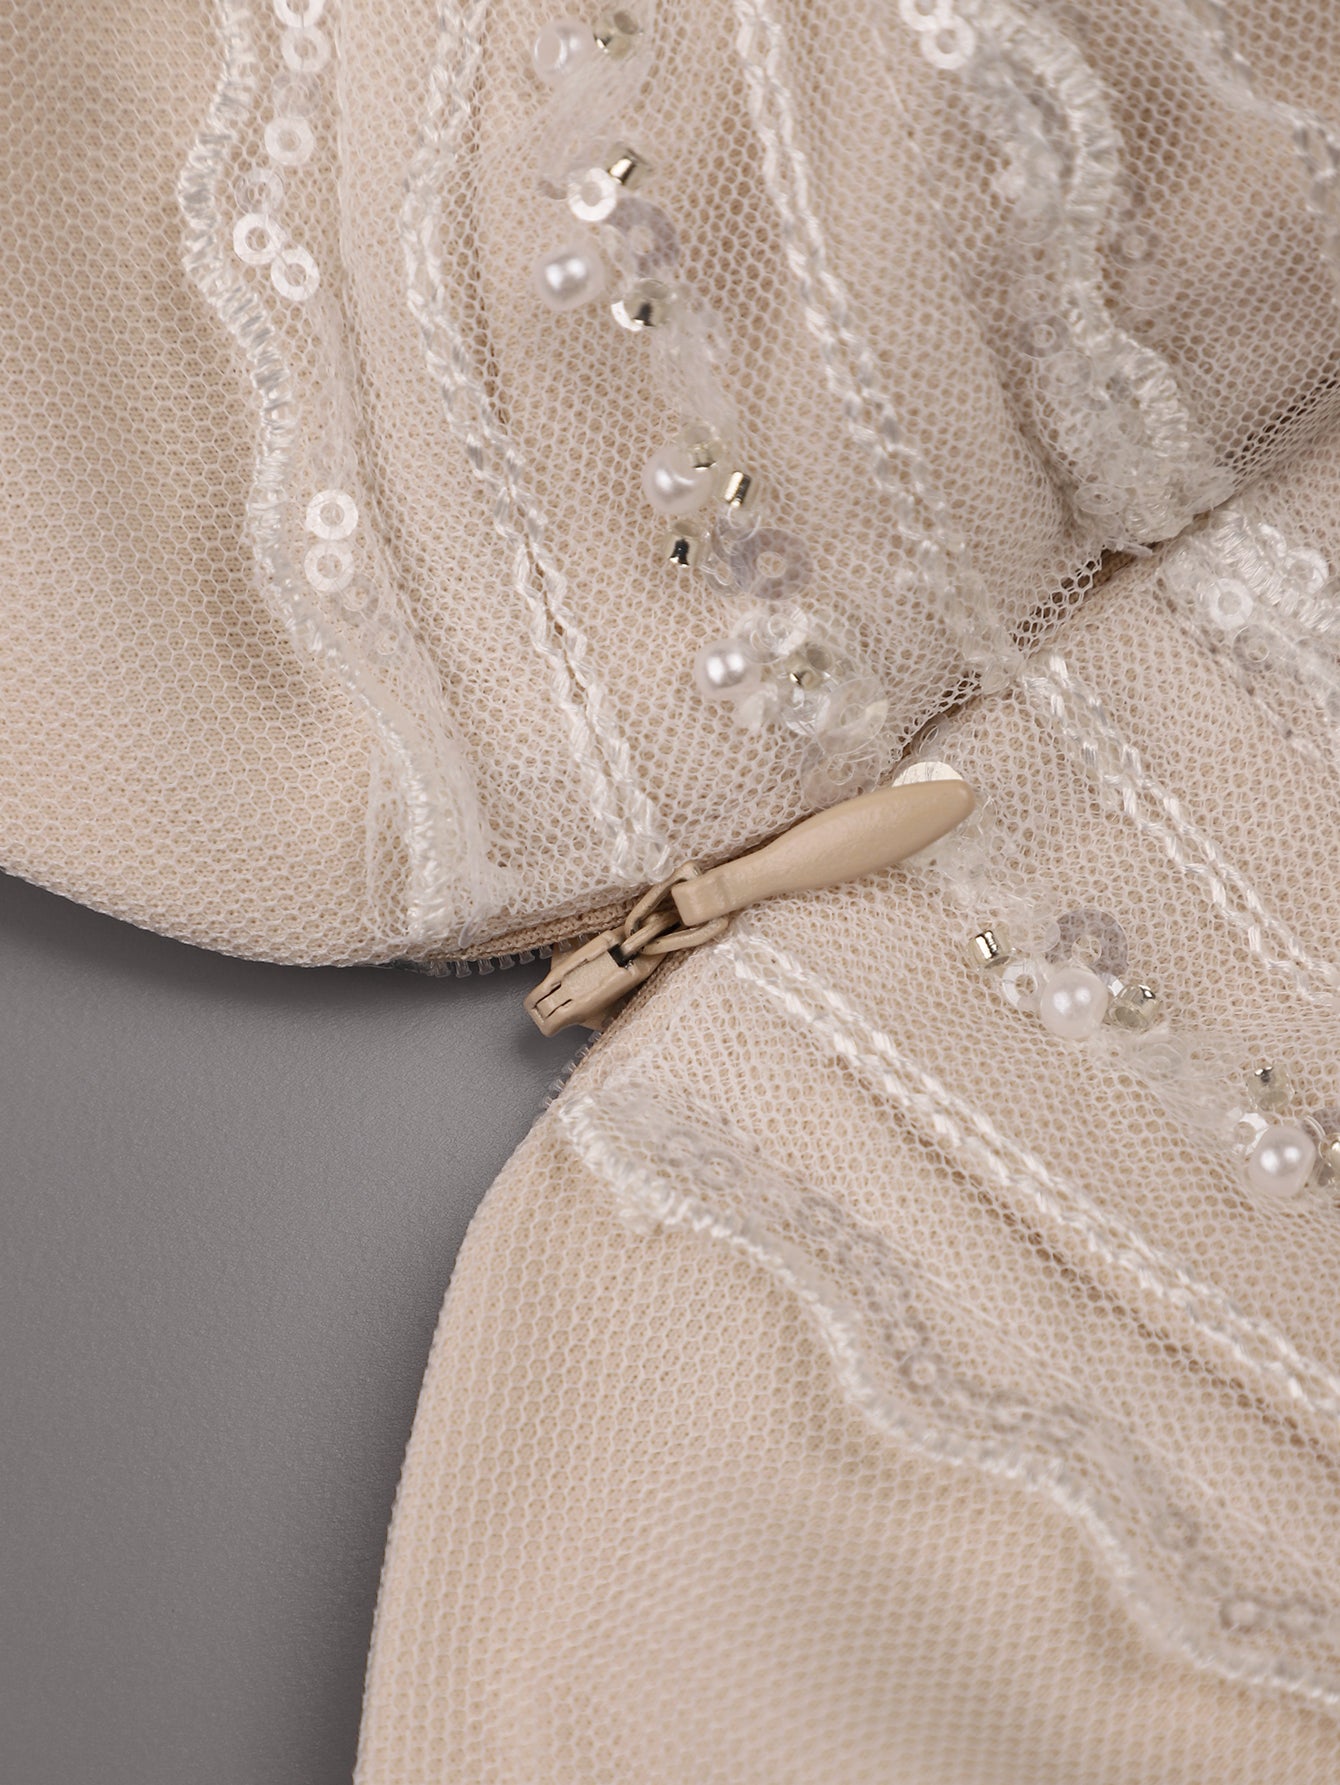 Vintage Sleeveless Lace Sheer Empire Waist A-Line Wedding Dress More Details 3